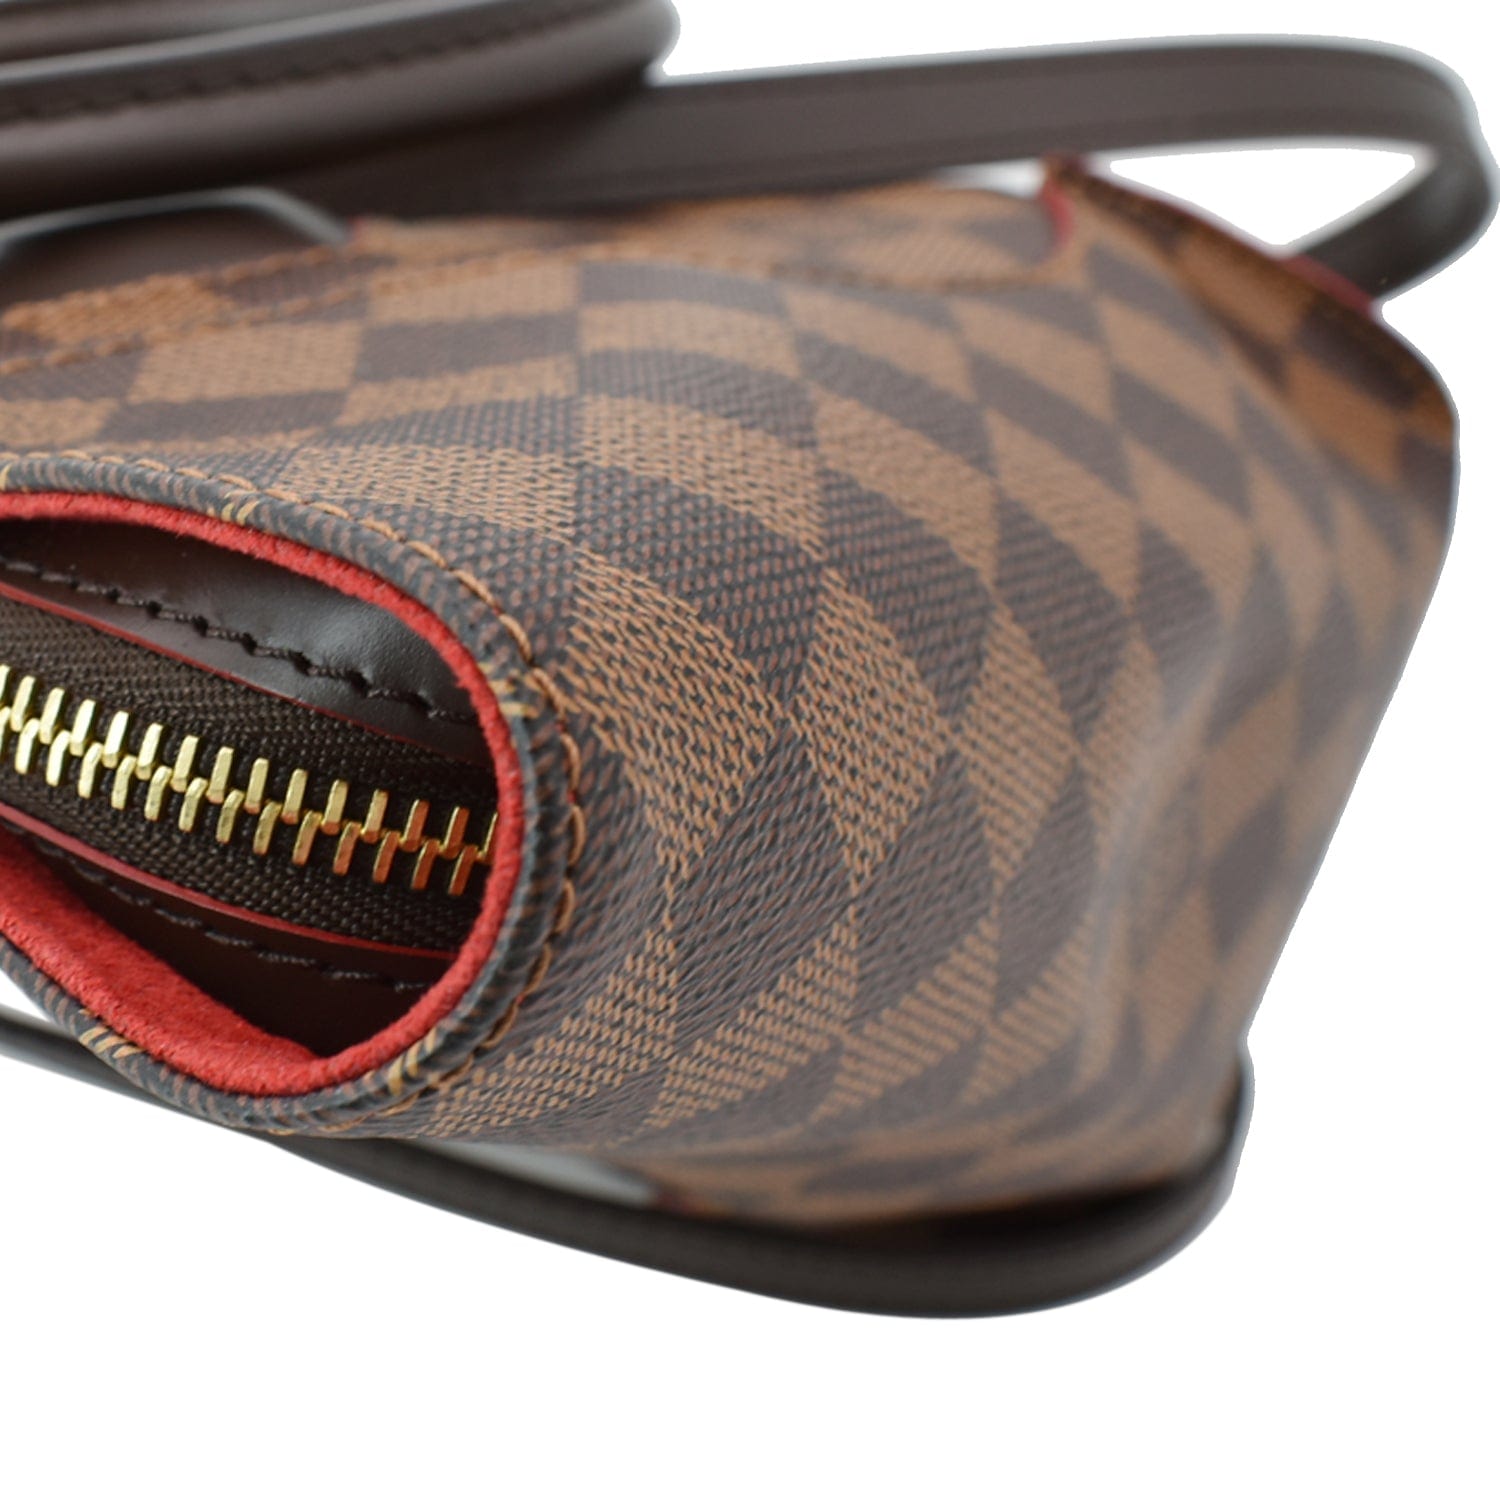 Caissa bag in ebony damier canvas Louis Vuitton - Second Hand